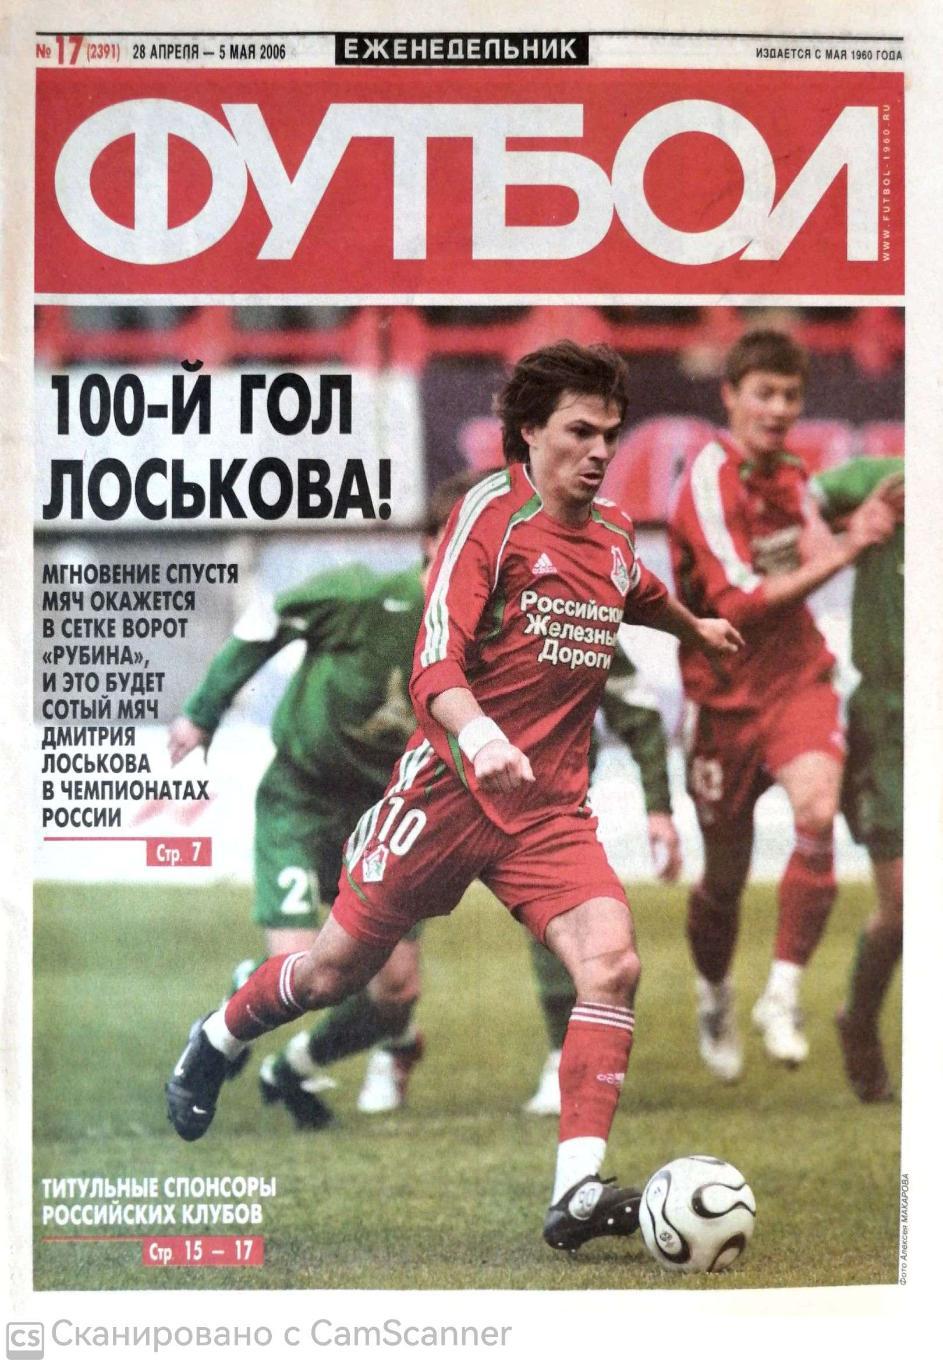 Еженедельник «Футбол» (Москва). 2006 год. №17